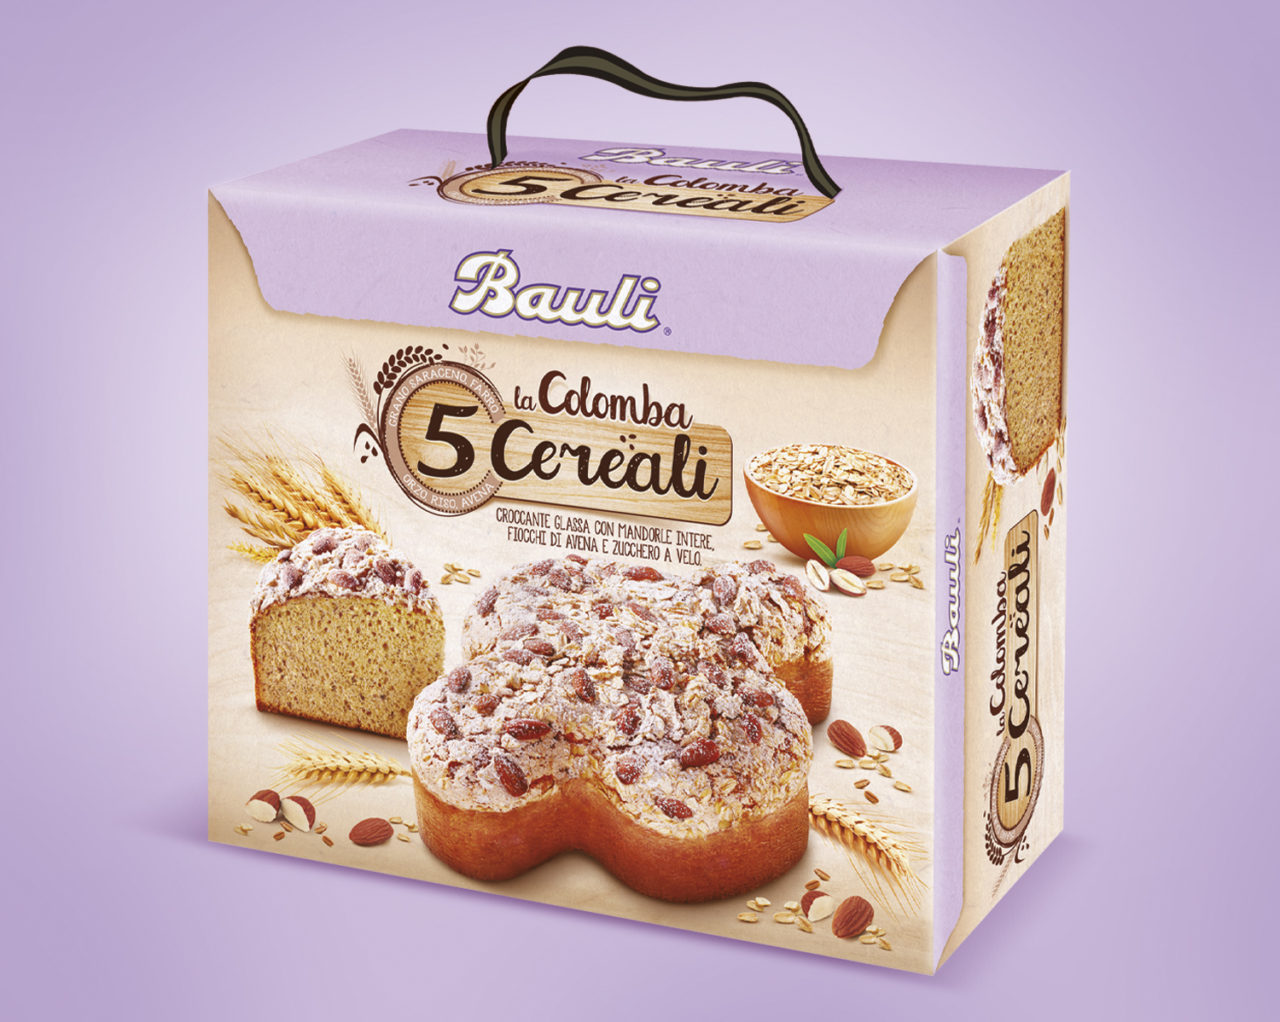 colomba-5-cereali-bauli-packaging